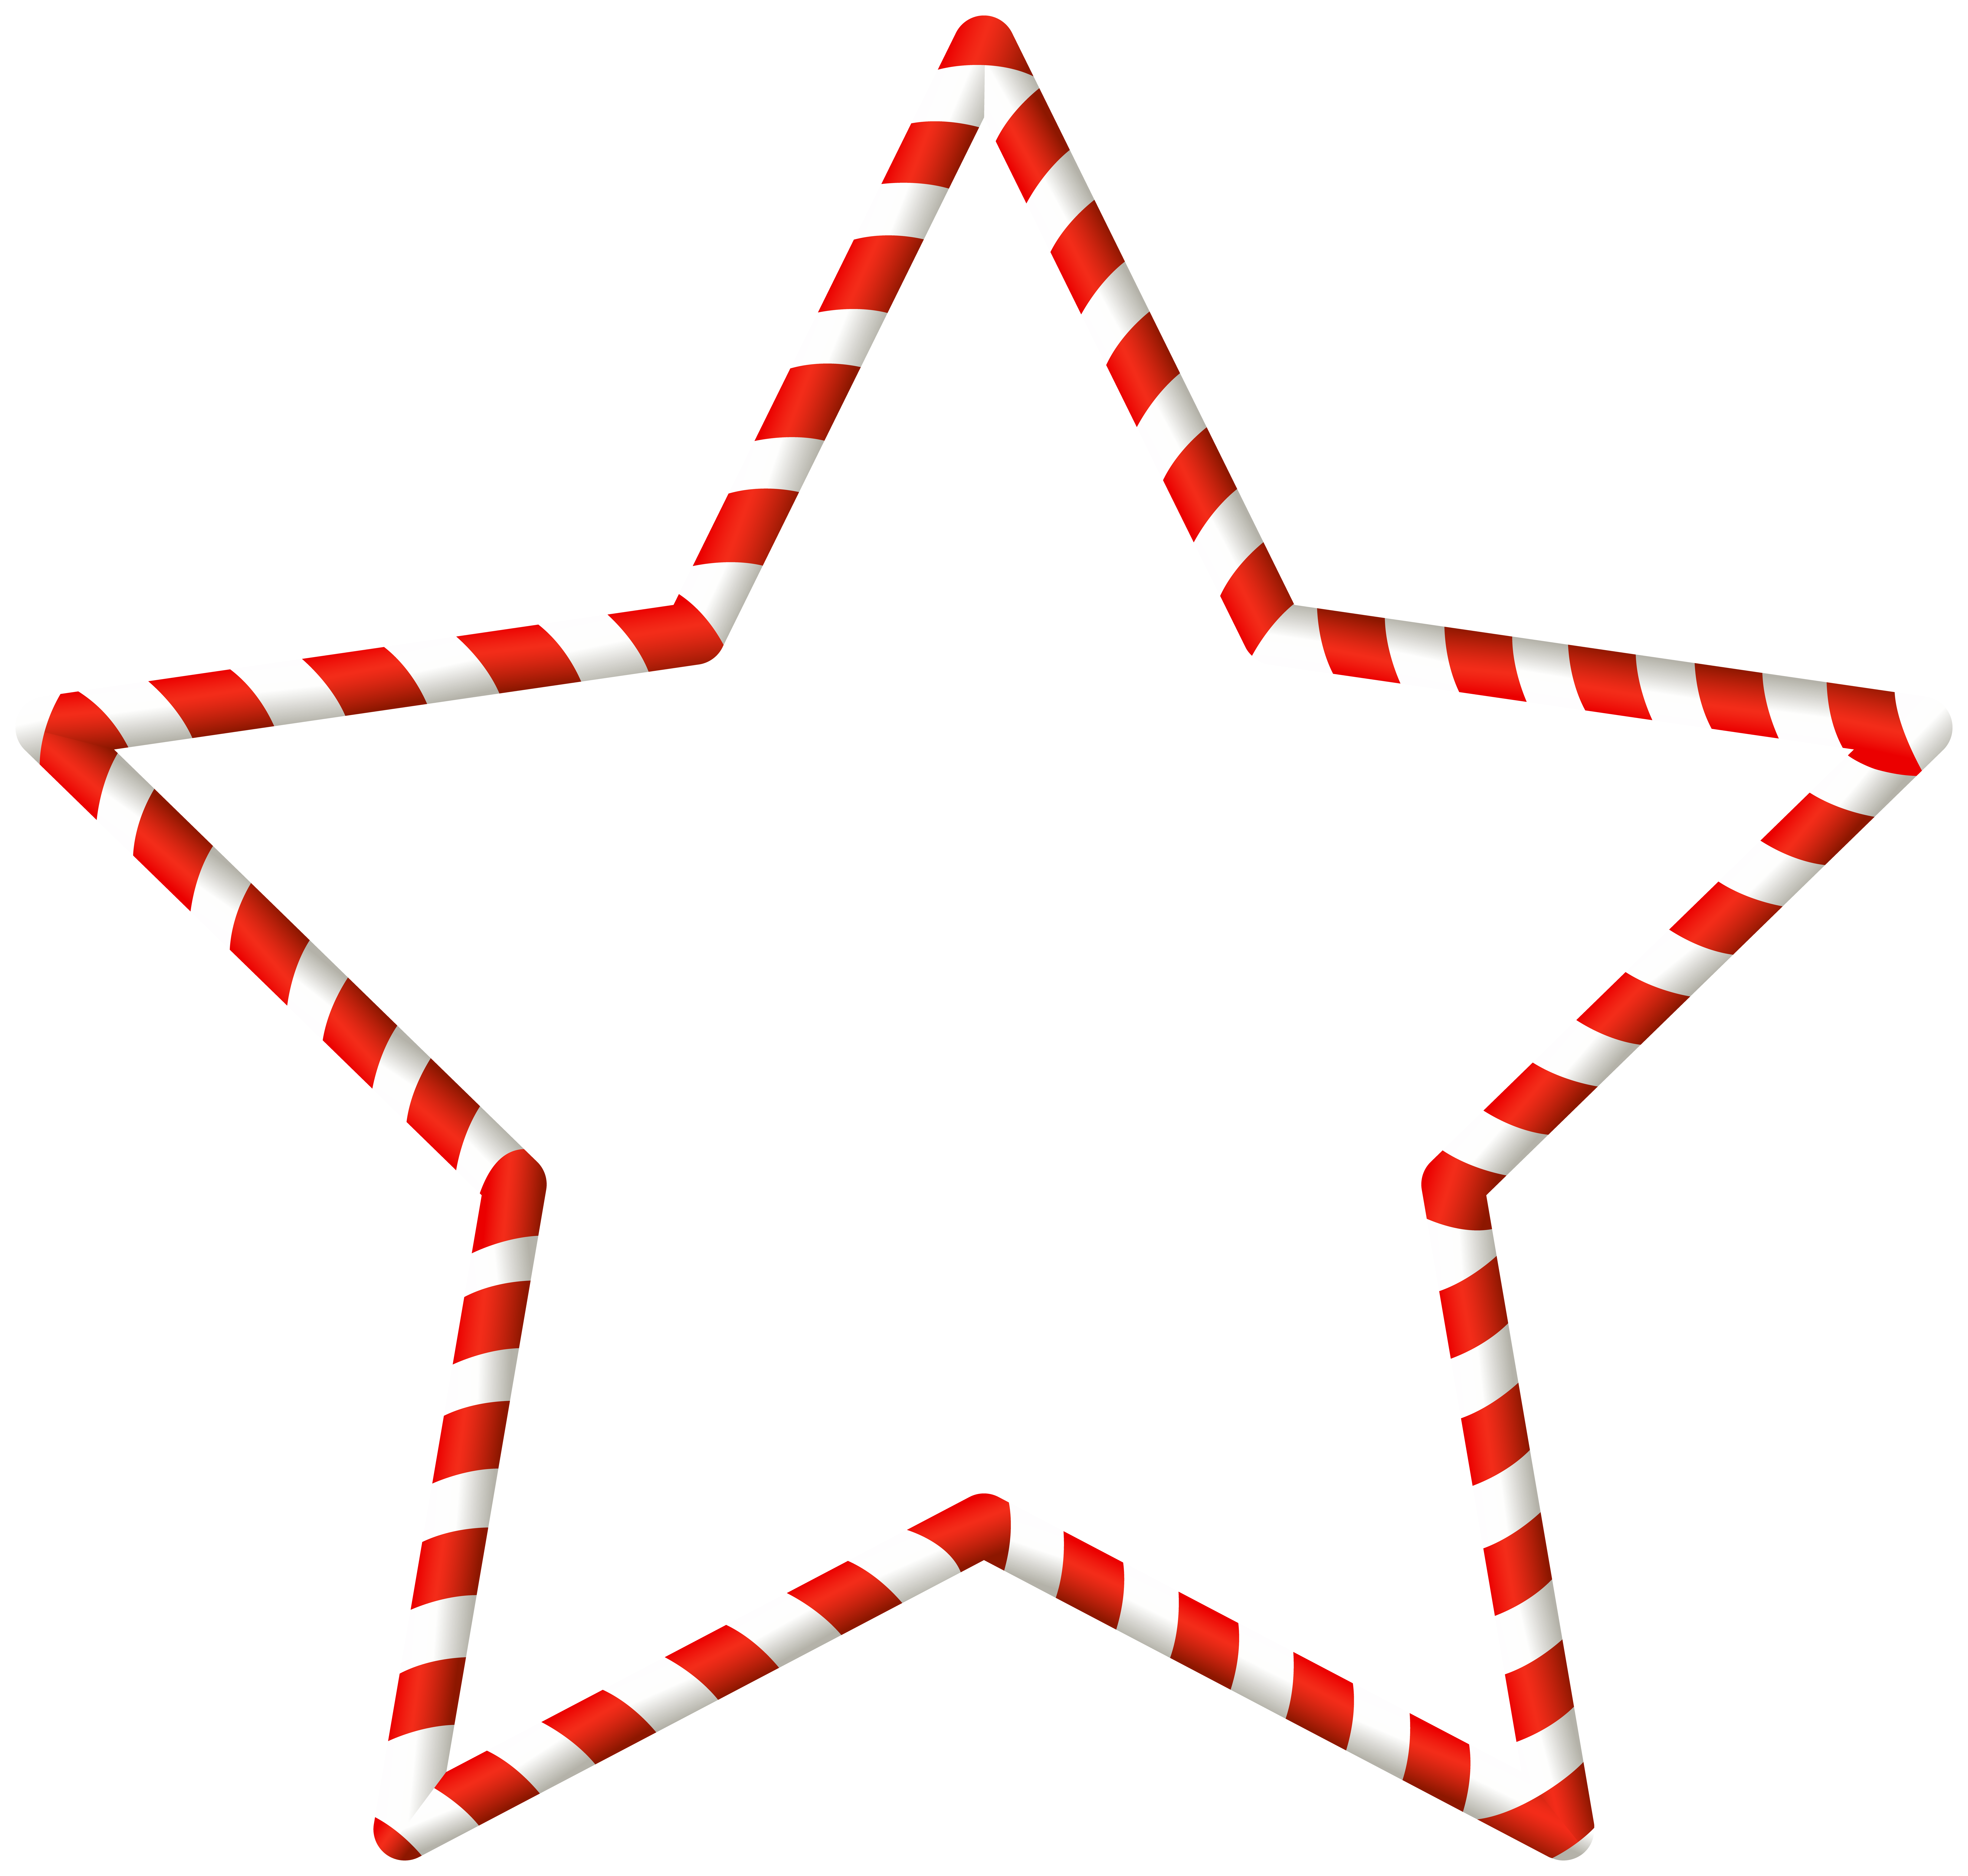 Christmas Candy Cane Star Border Clip Art Image.